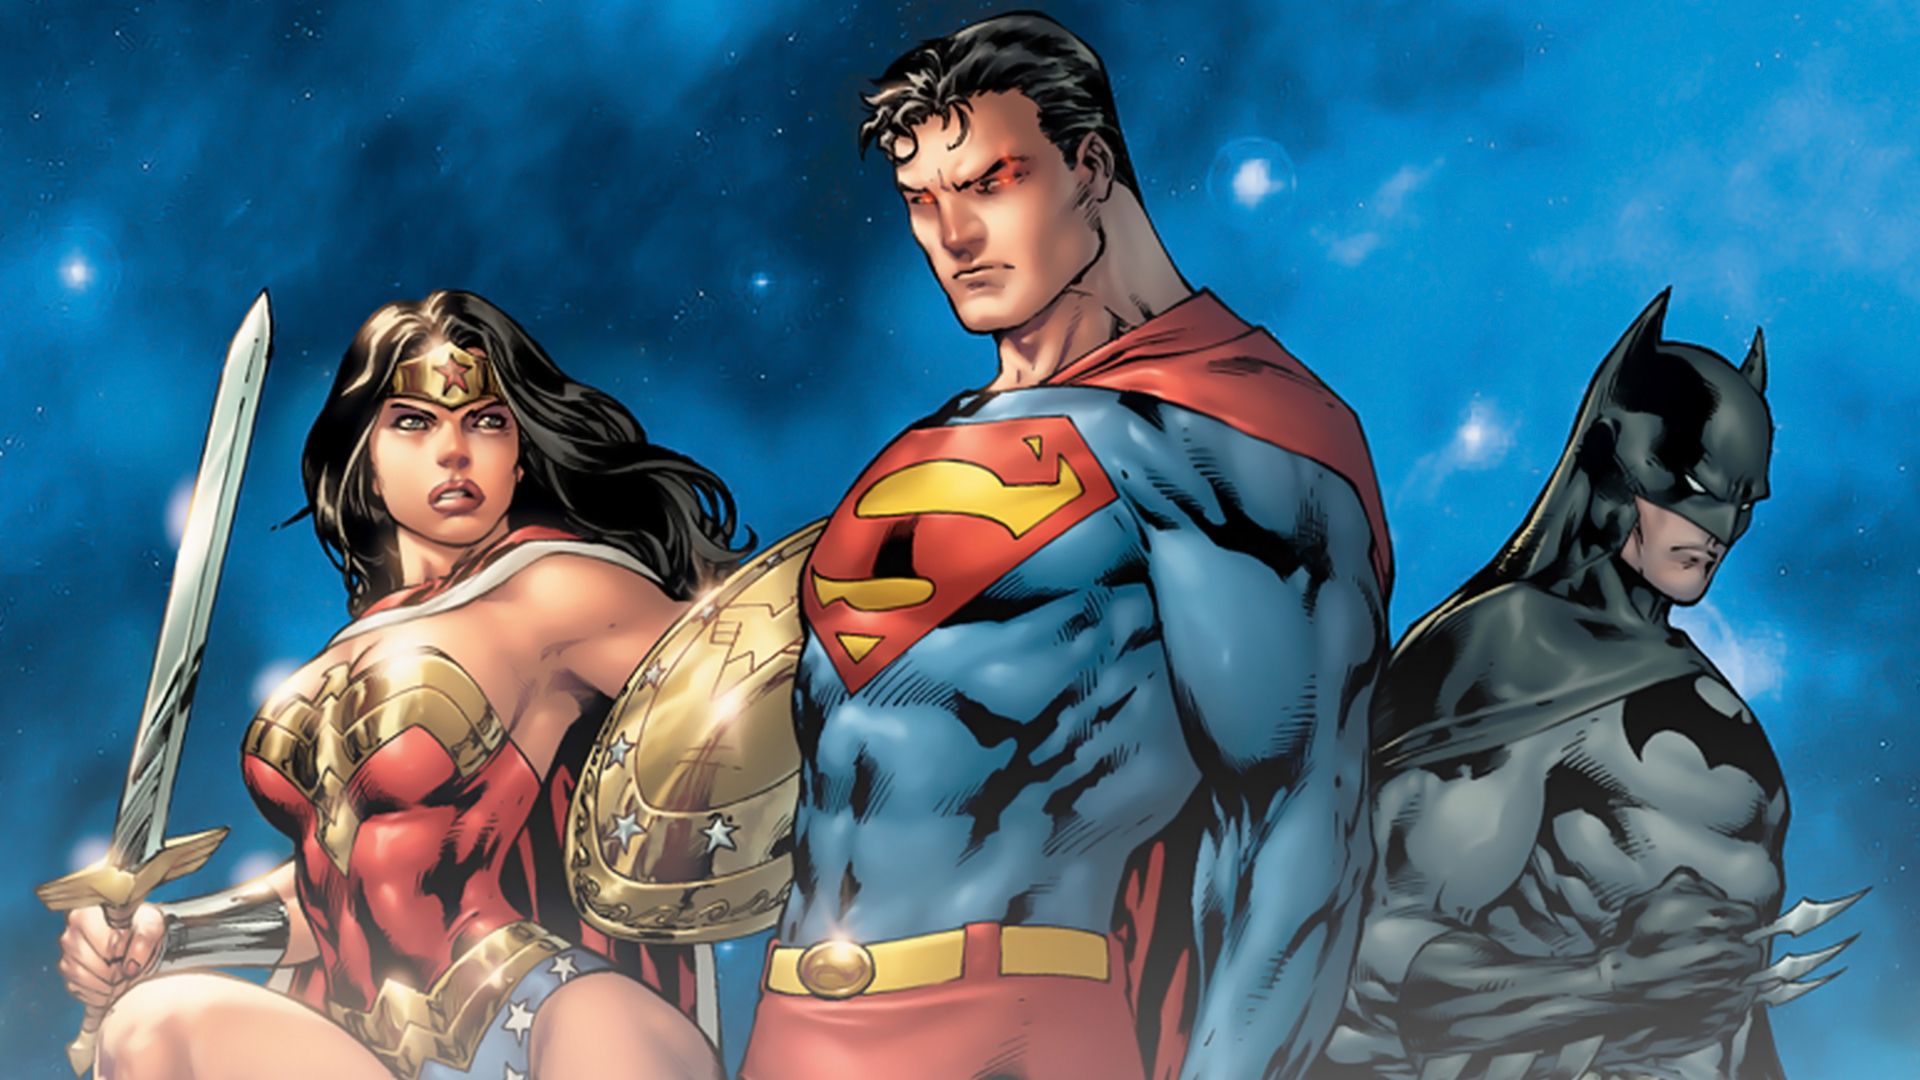 Justice League batman superman and wonder woman wallpaper